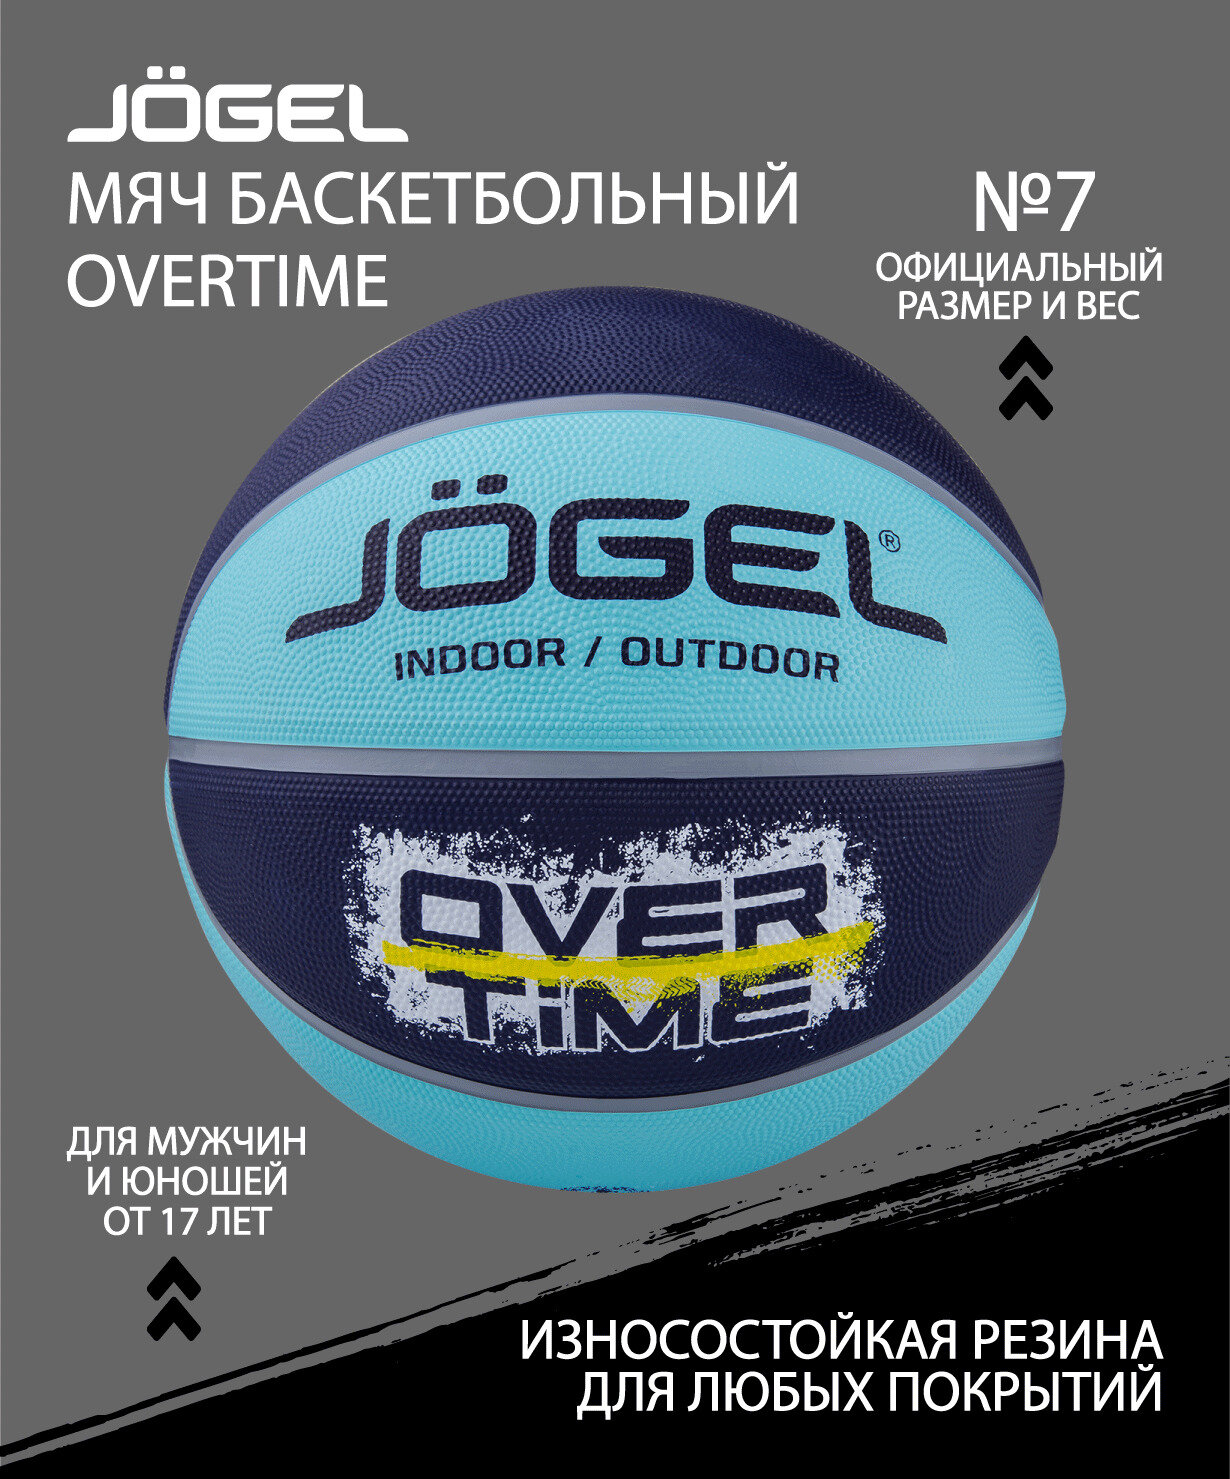 Мяч баскетбольный JOGEL Streets OVERTIME №7